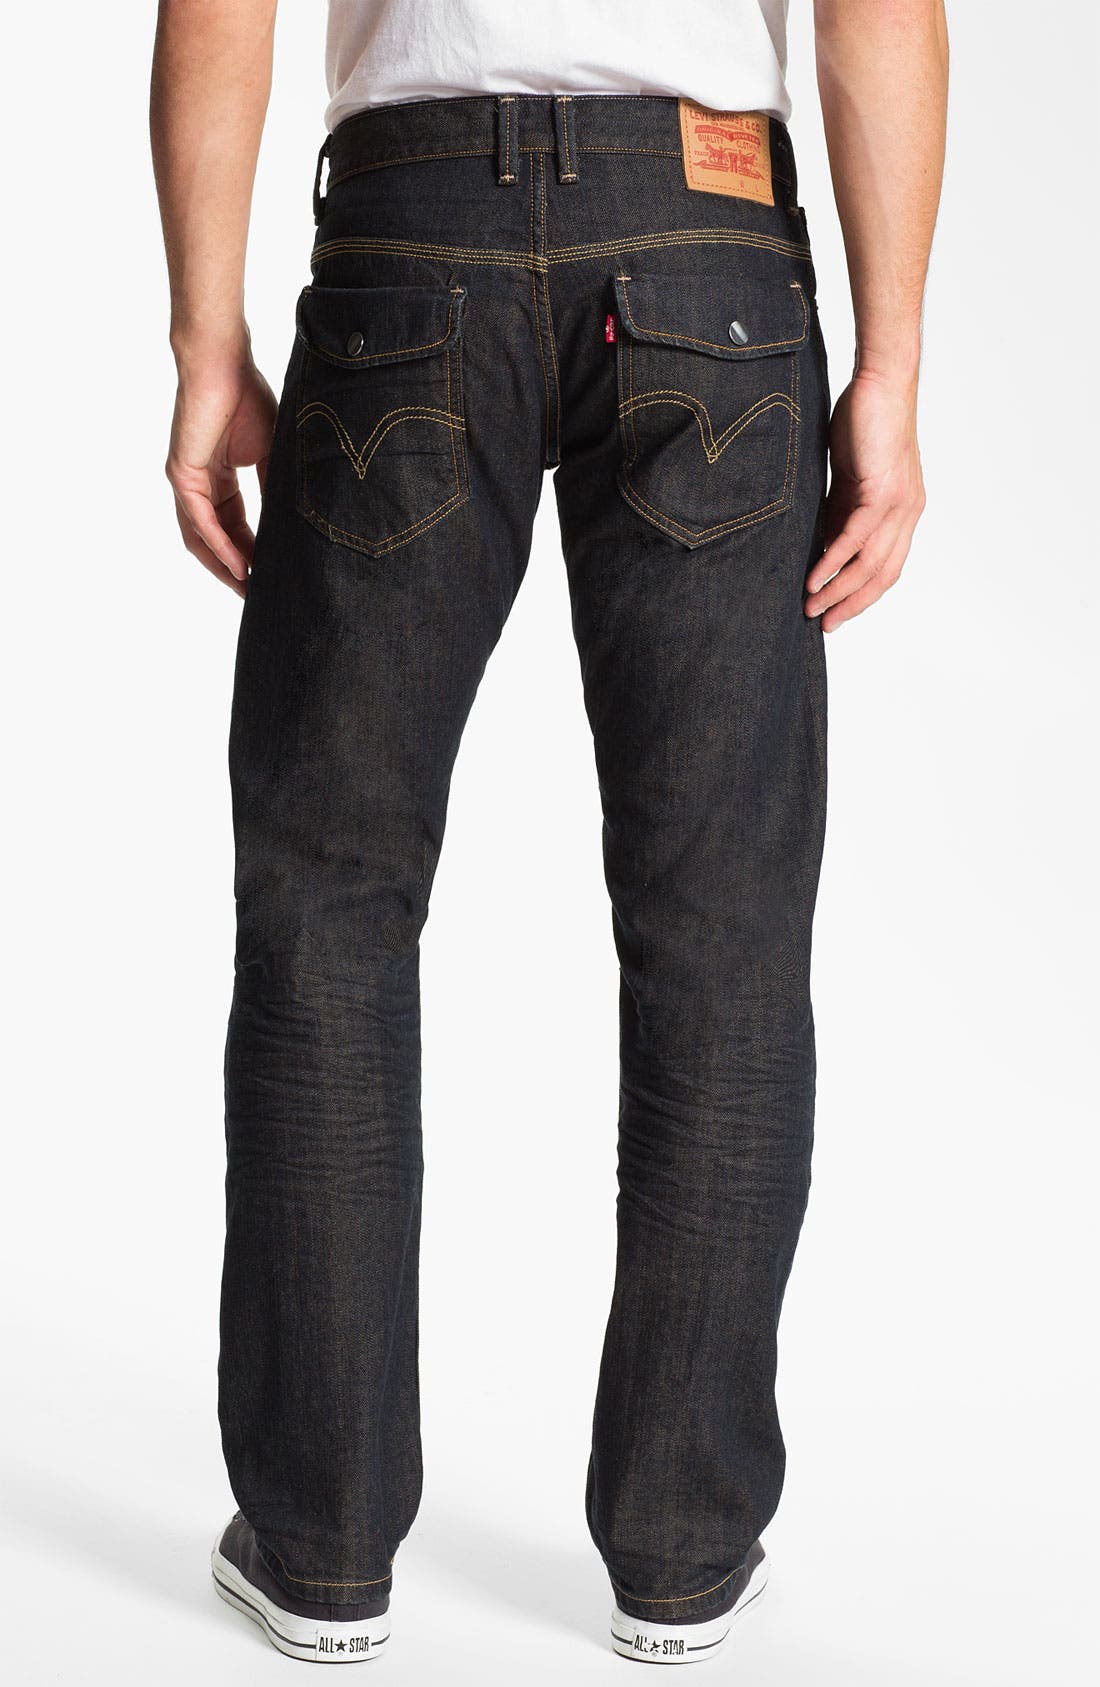 levi 569 flap pocket jeans